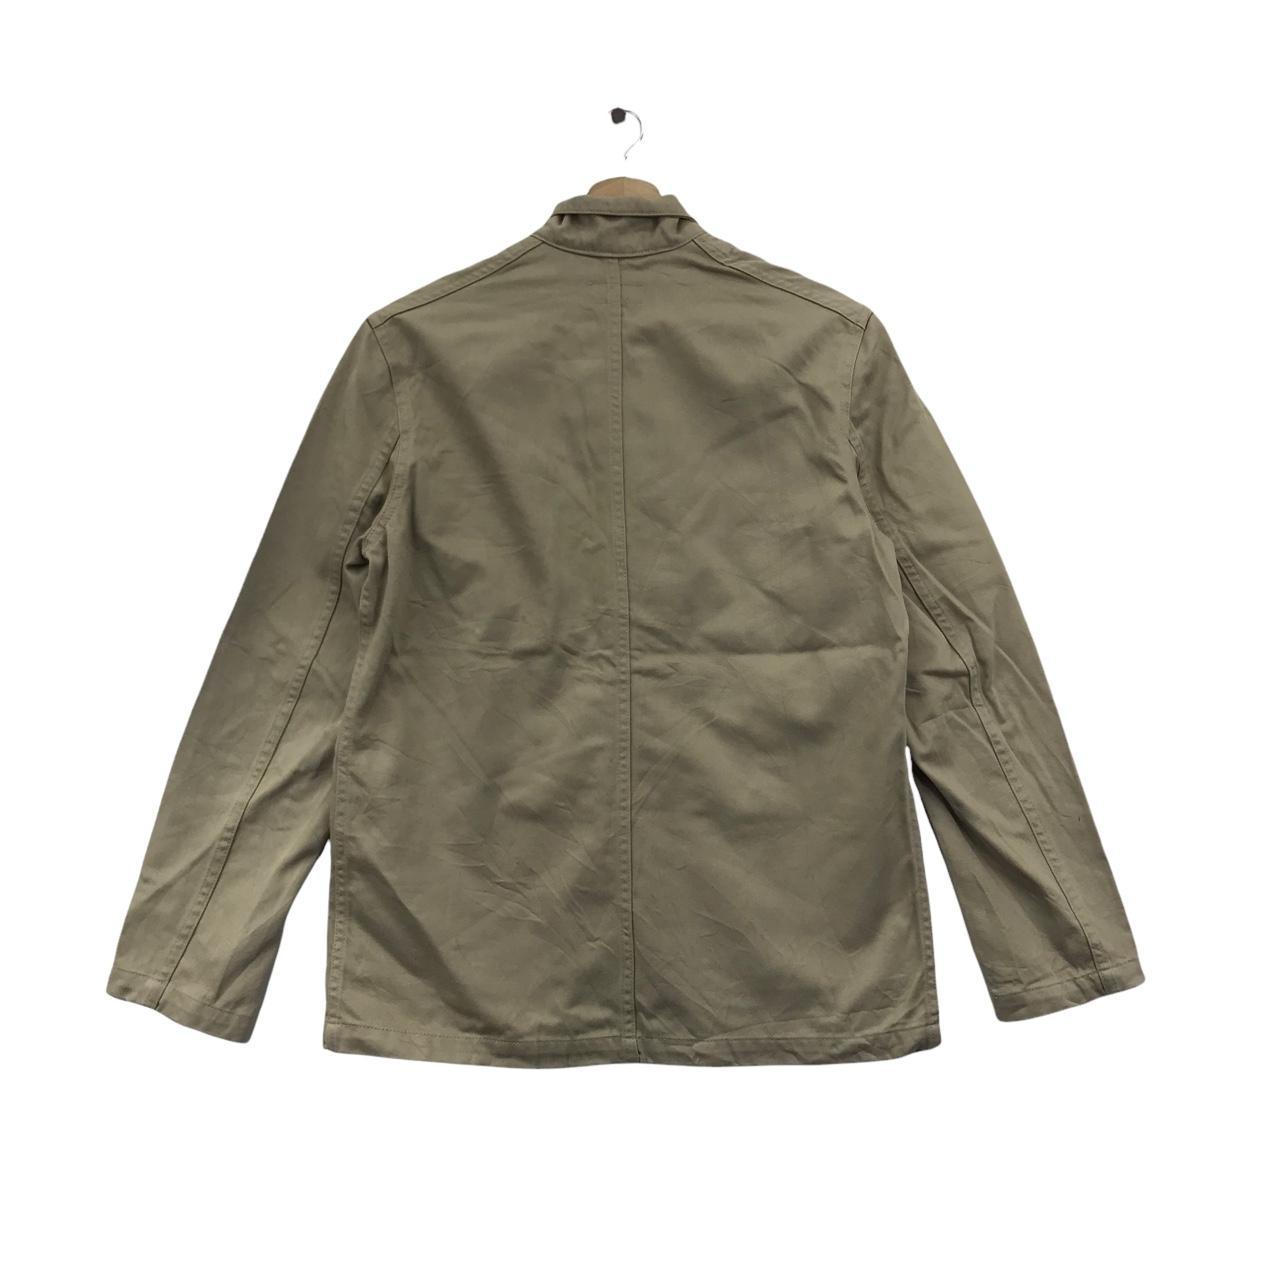 BEAMS BOYS Japanese Brand Core Jacket Coat... - Depop